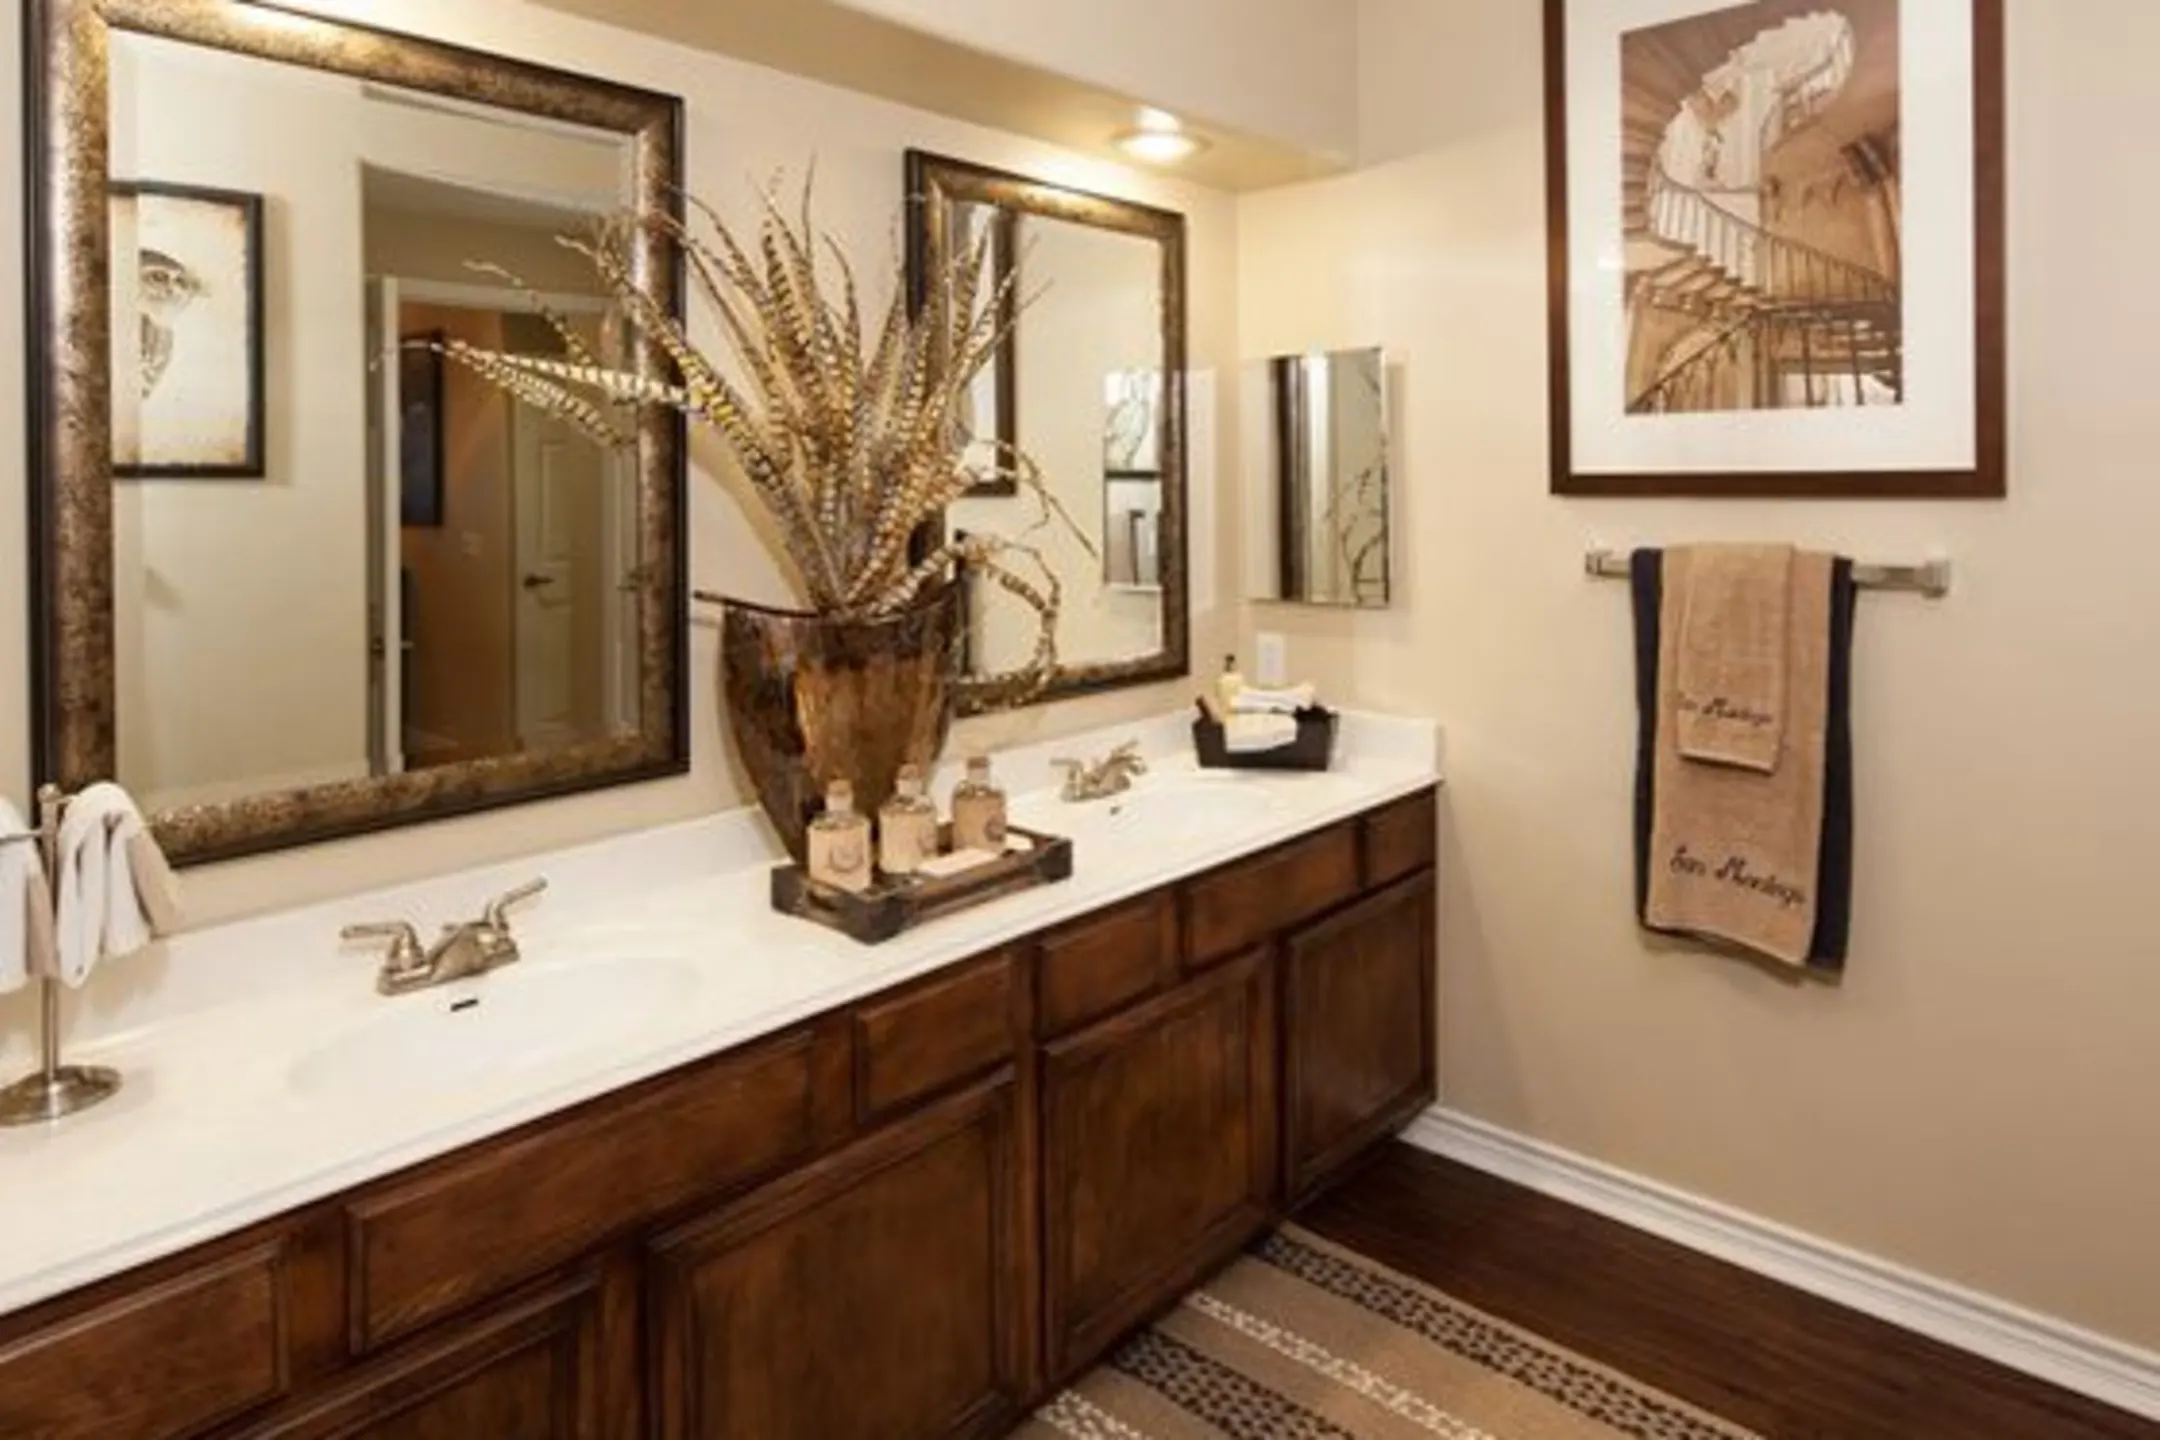 Bathroom - 77013 Luxury Properties - Houston, TX